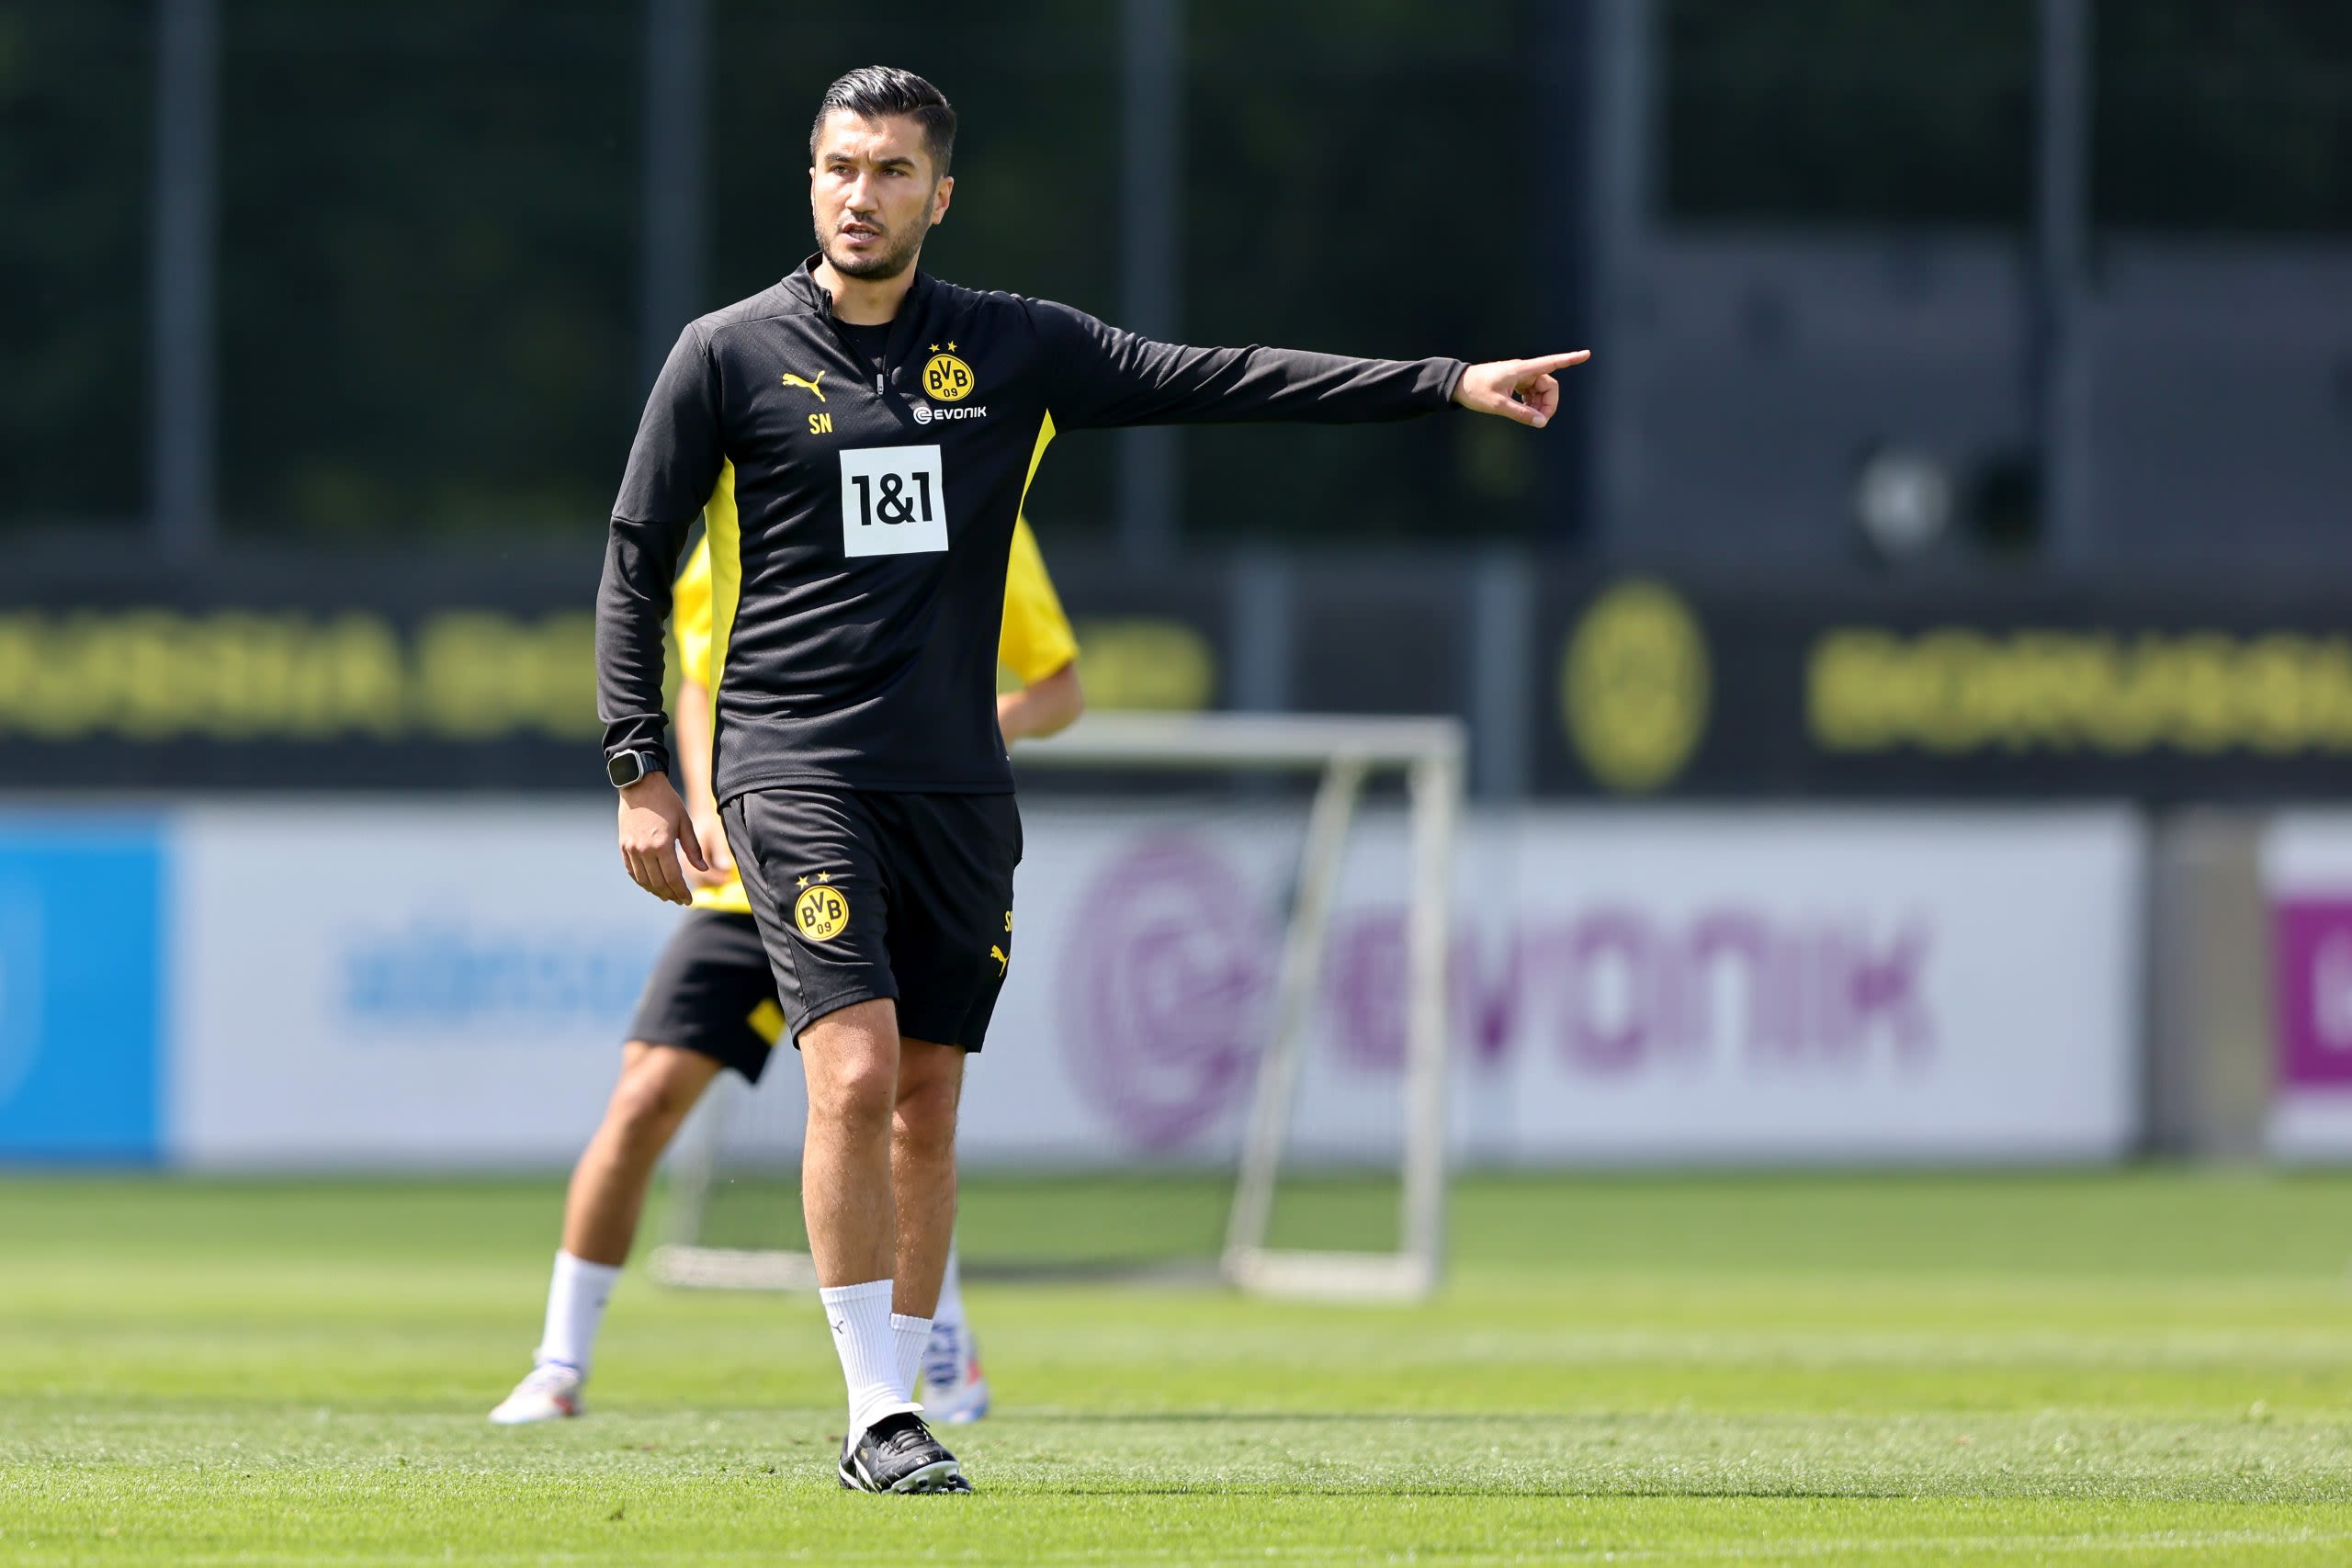 Nuri Sahin plans to play more attacking football with Borussia Dortmund